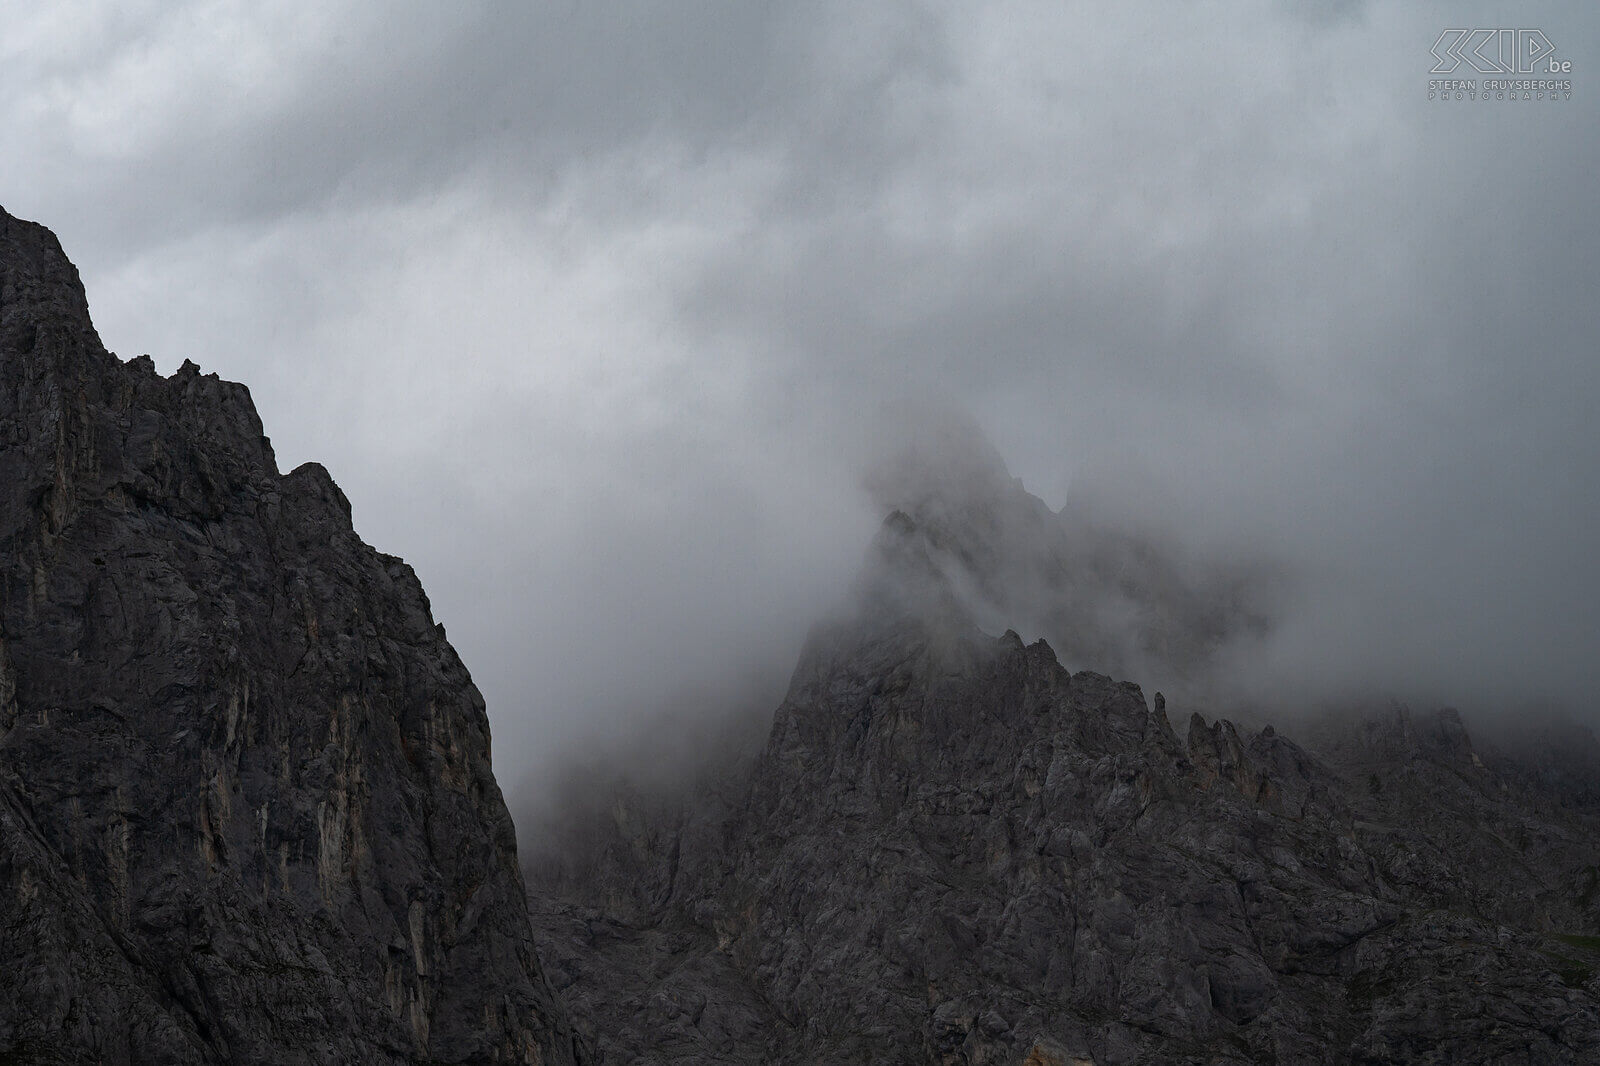 Dachstein Rotspieken rondom de Dachstein gletsjer die op een hoogte van 2700m ligt Stefan Cruysberghs